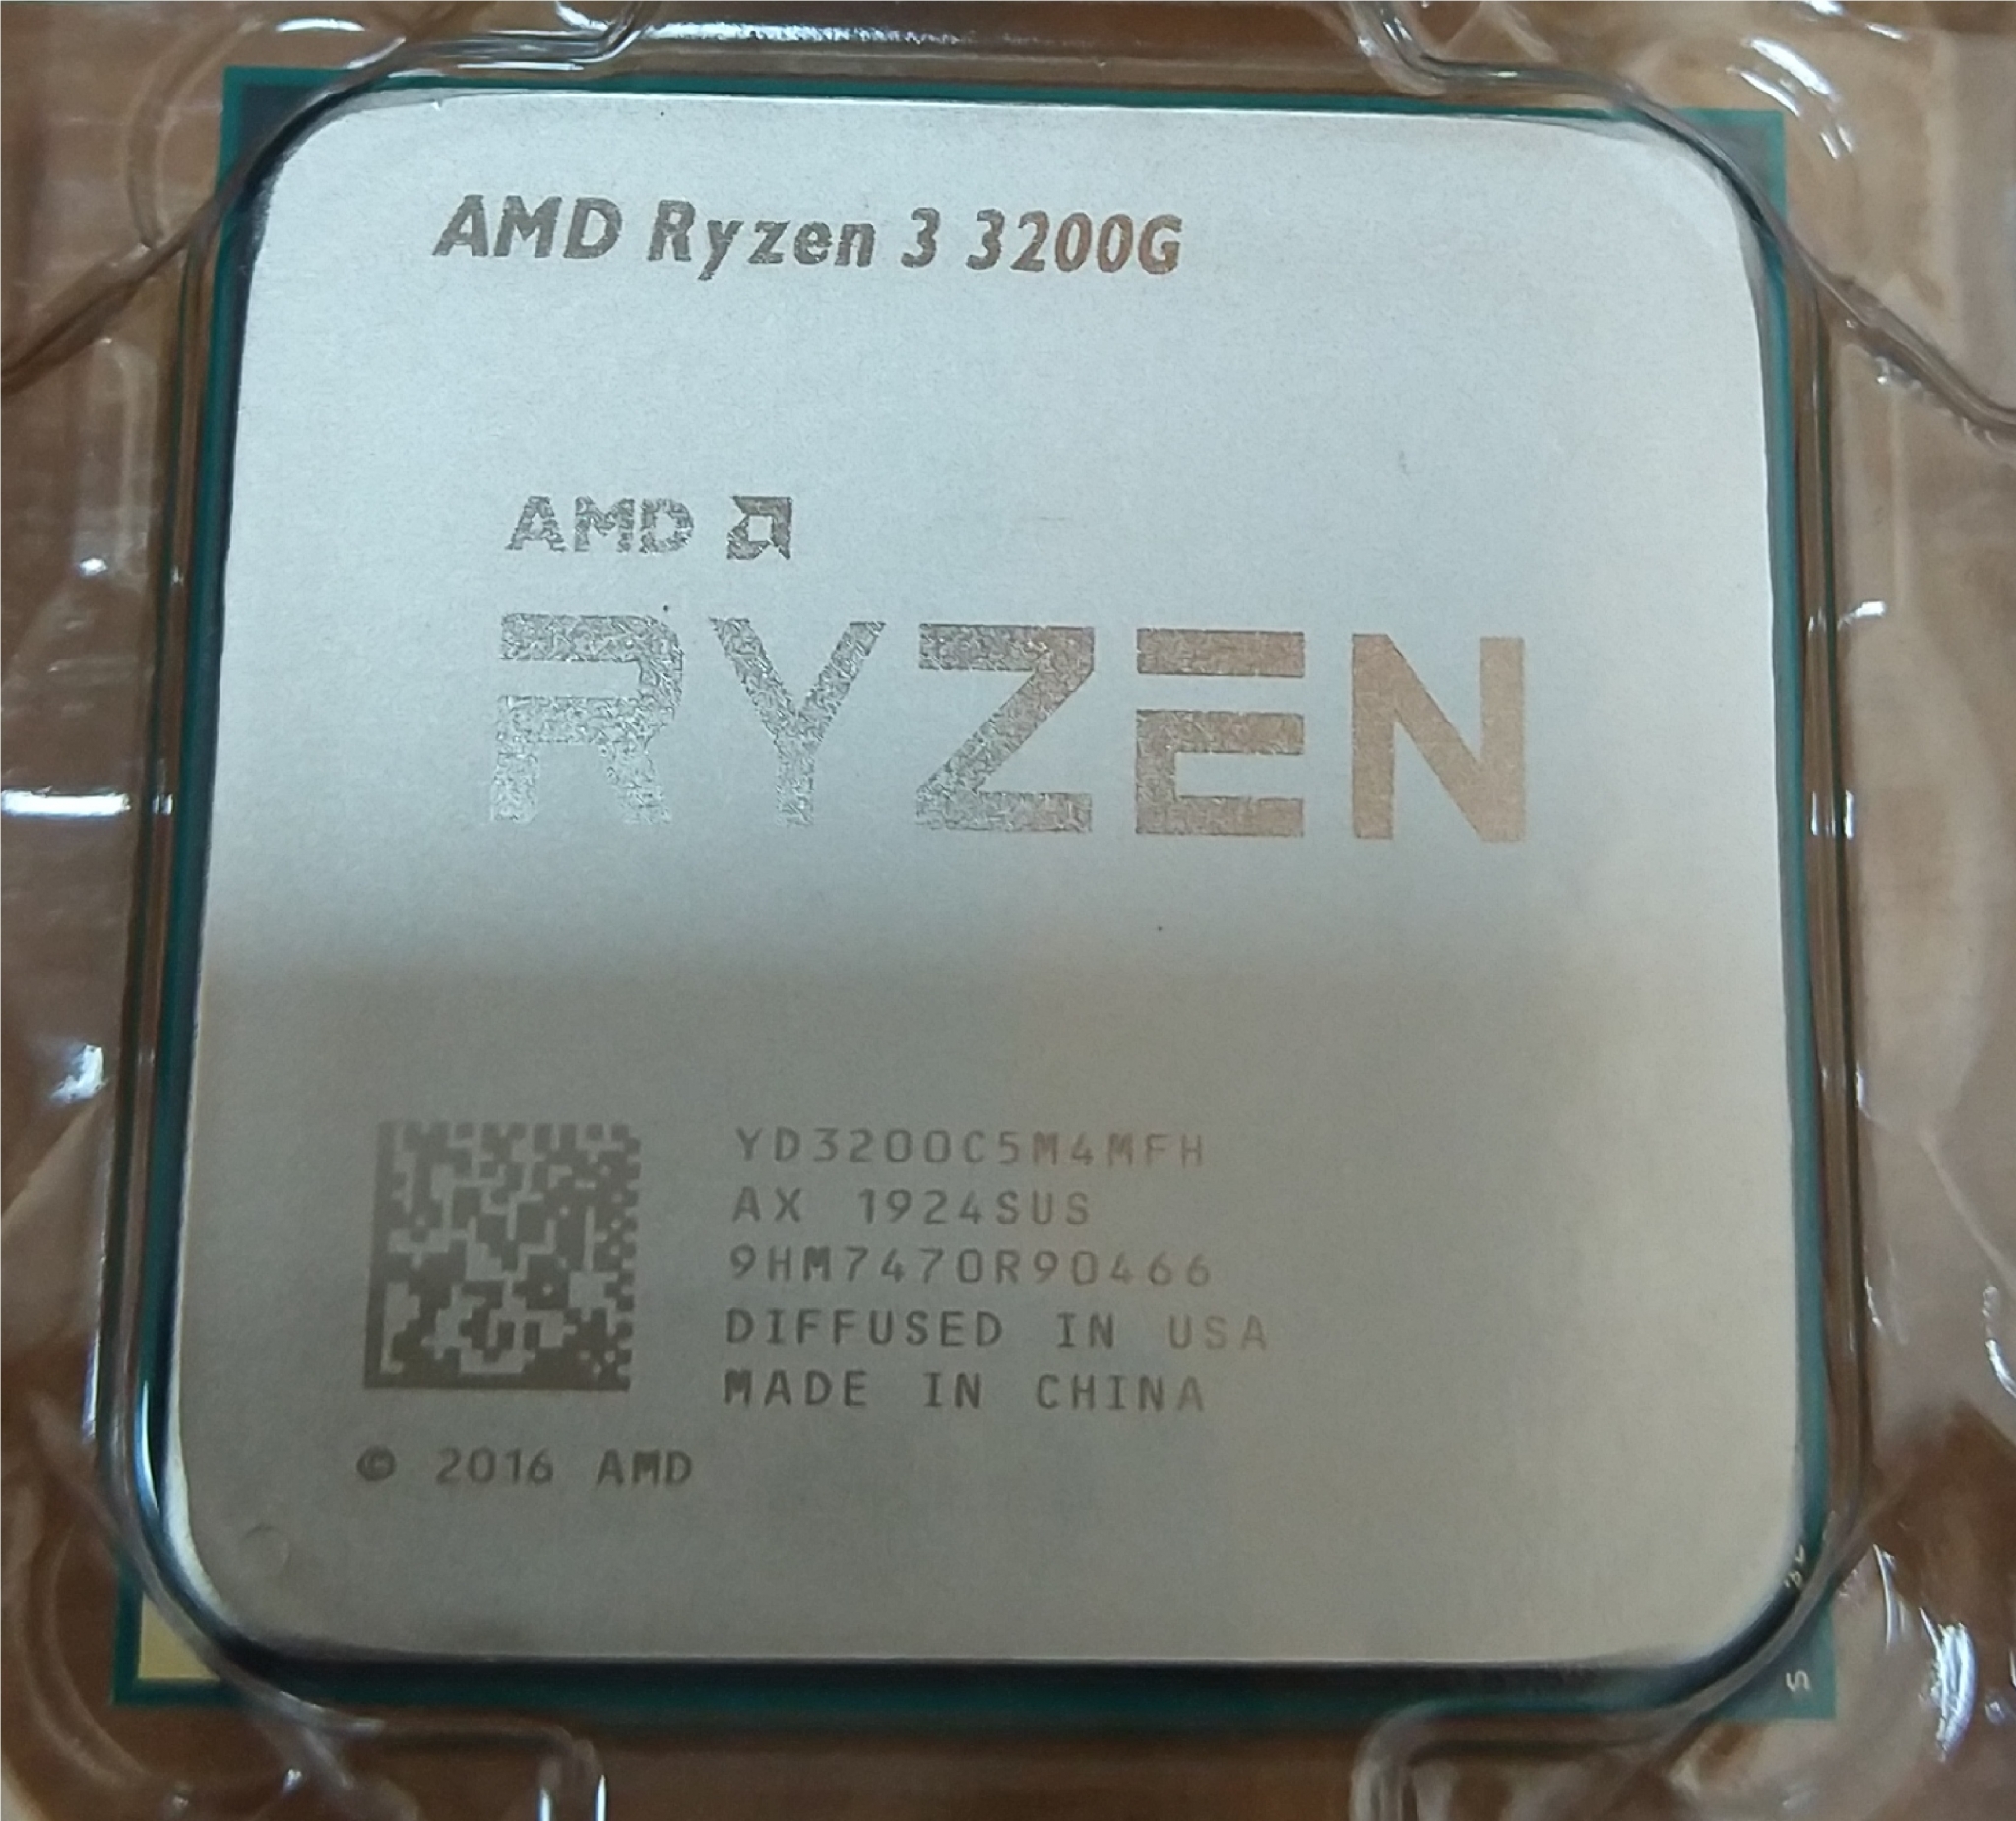 3 pro 3200g. Ryzen 3200g. AMD Ryzen 3 3200g. AMD Ryzen 3 Pro 3200g. Процессор AMD Ryzen 3 3200g OEM.